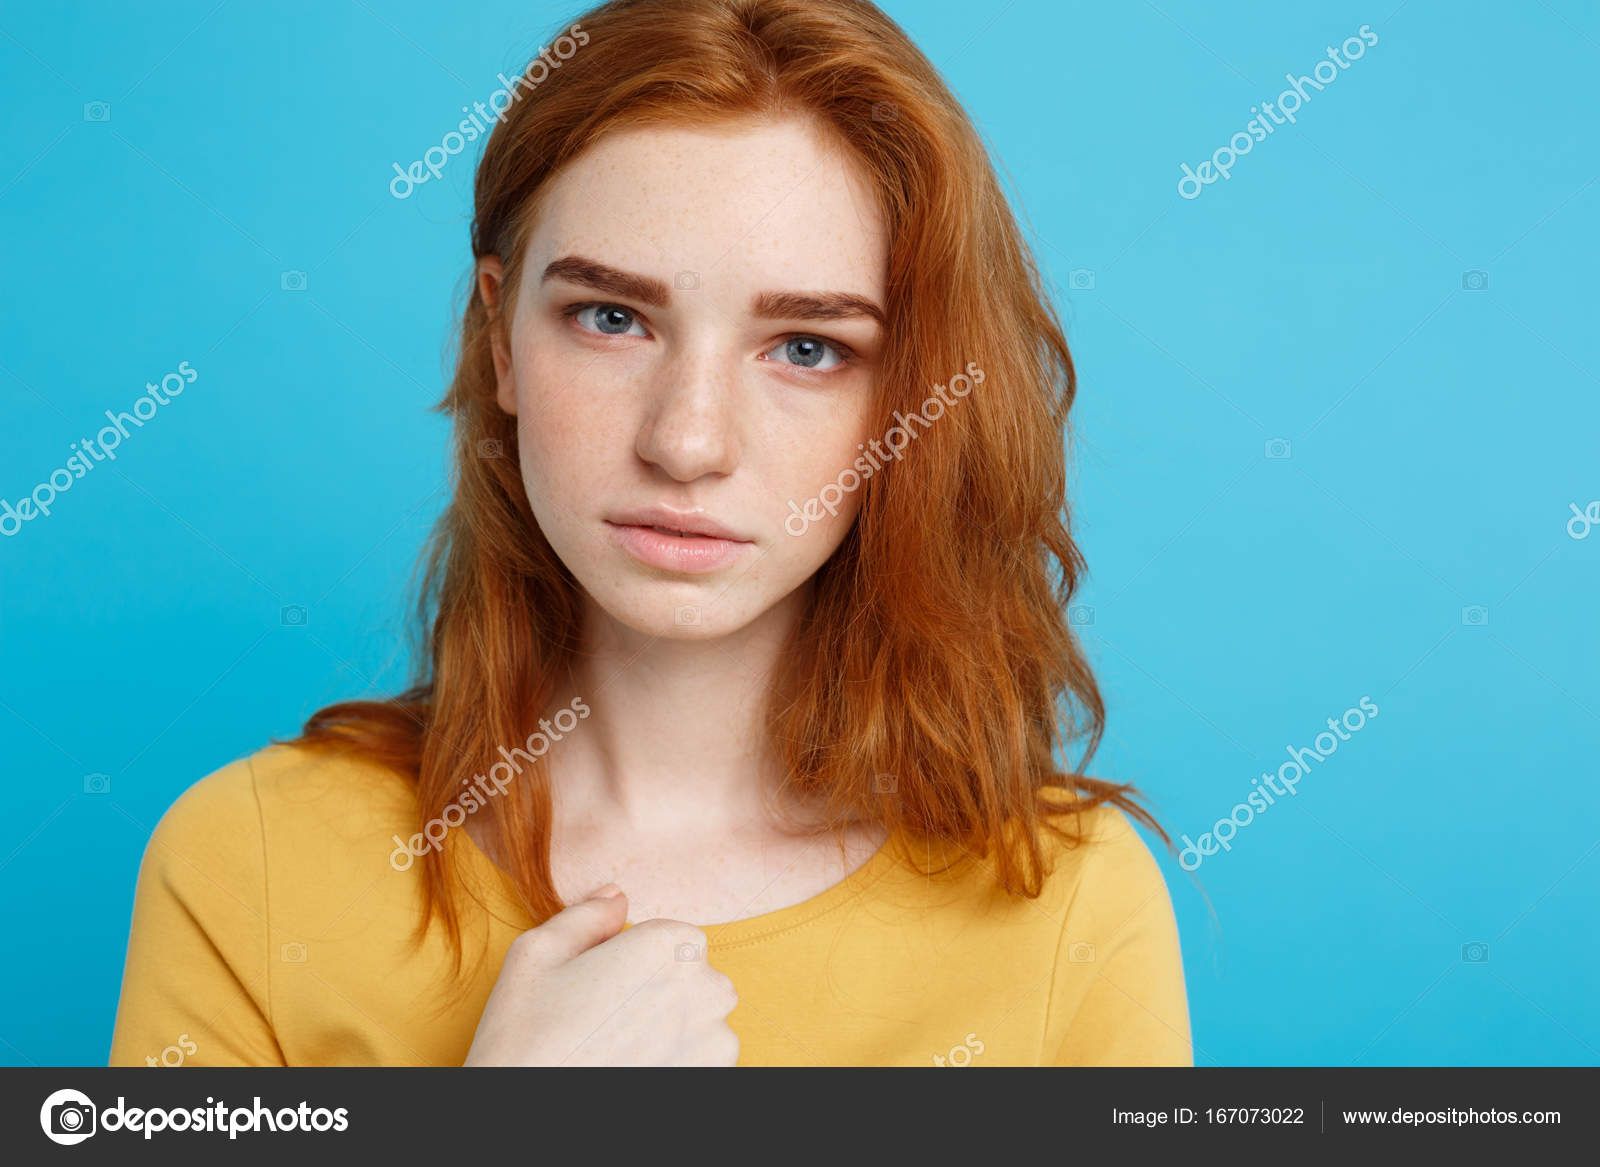 best of Redhead Pastel portrait